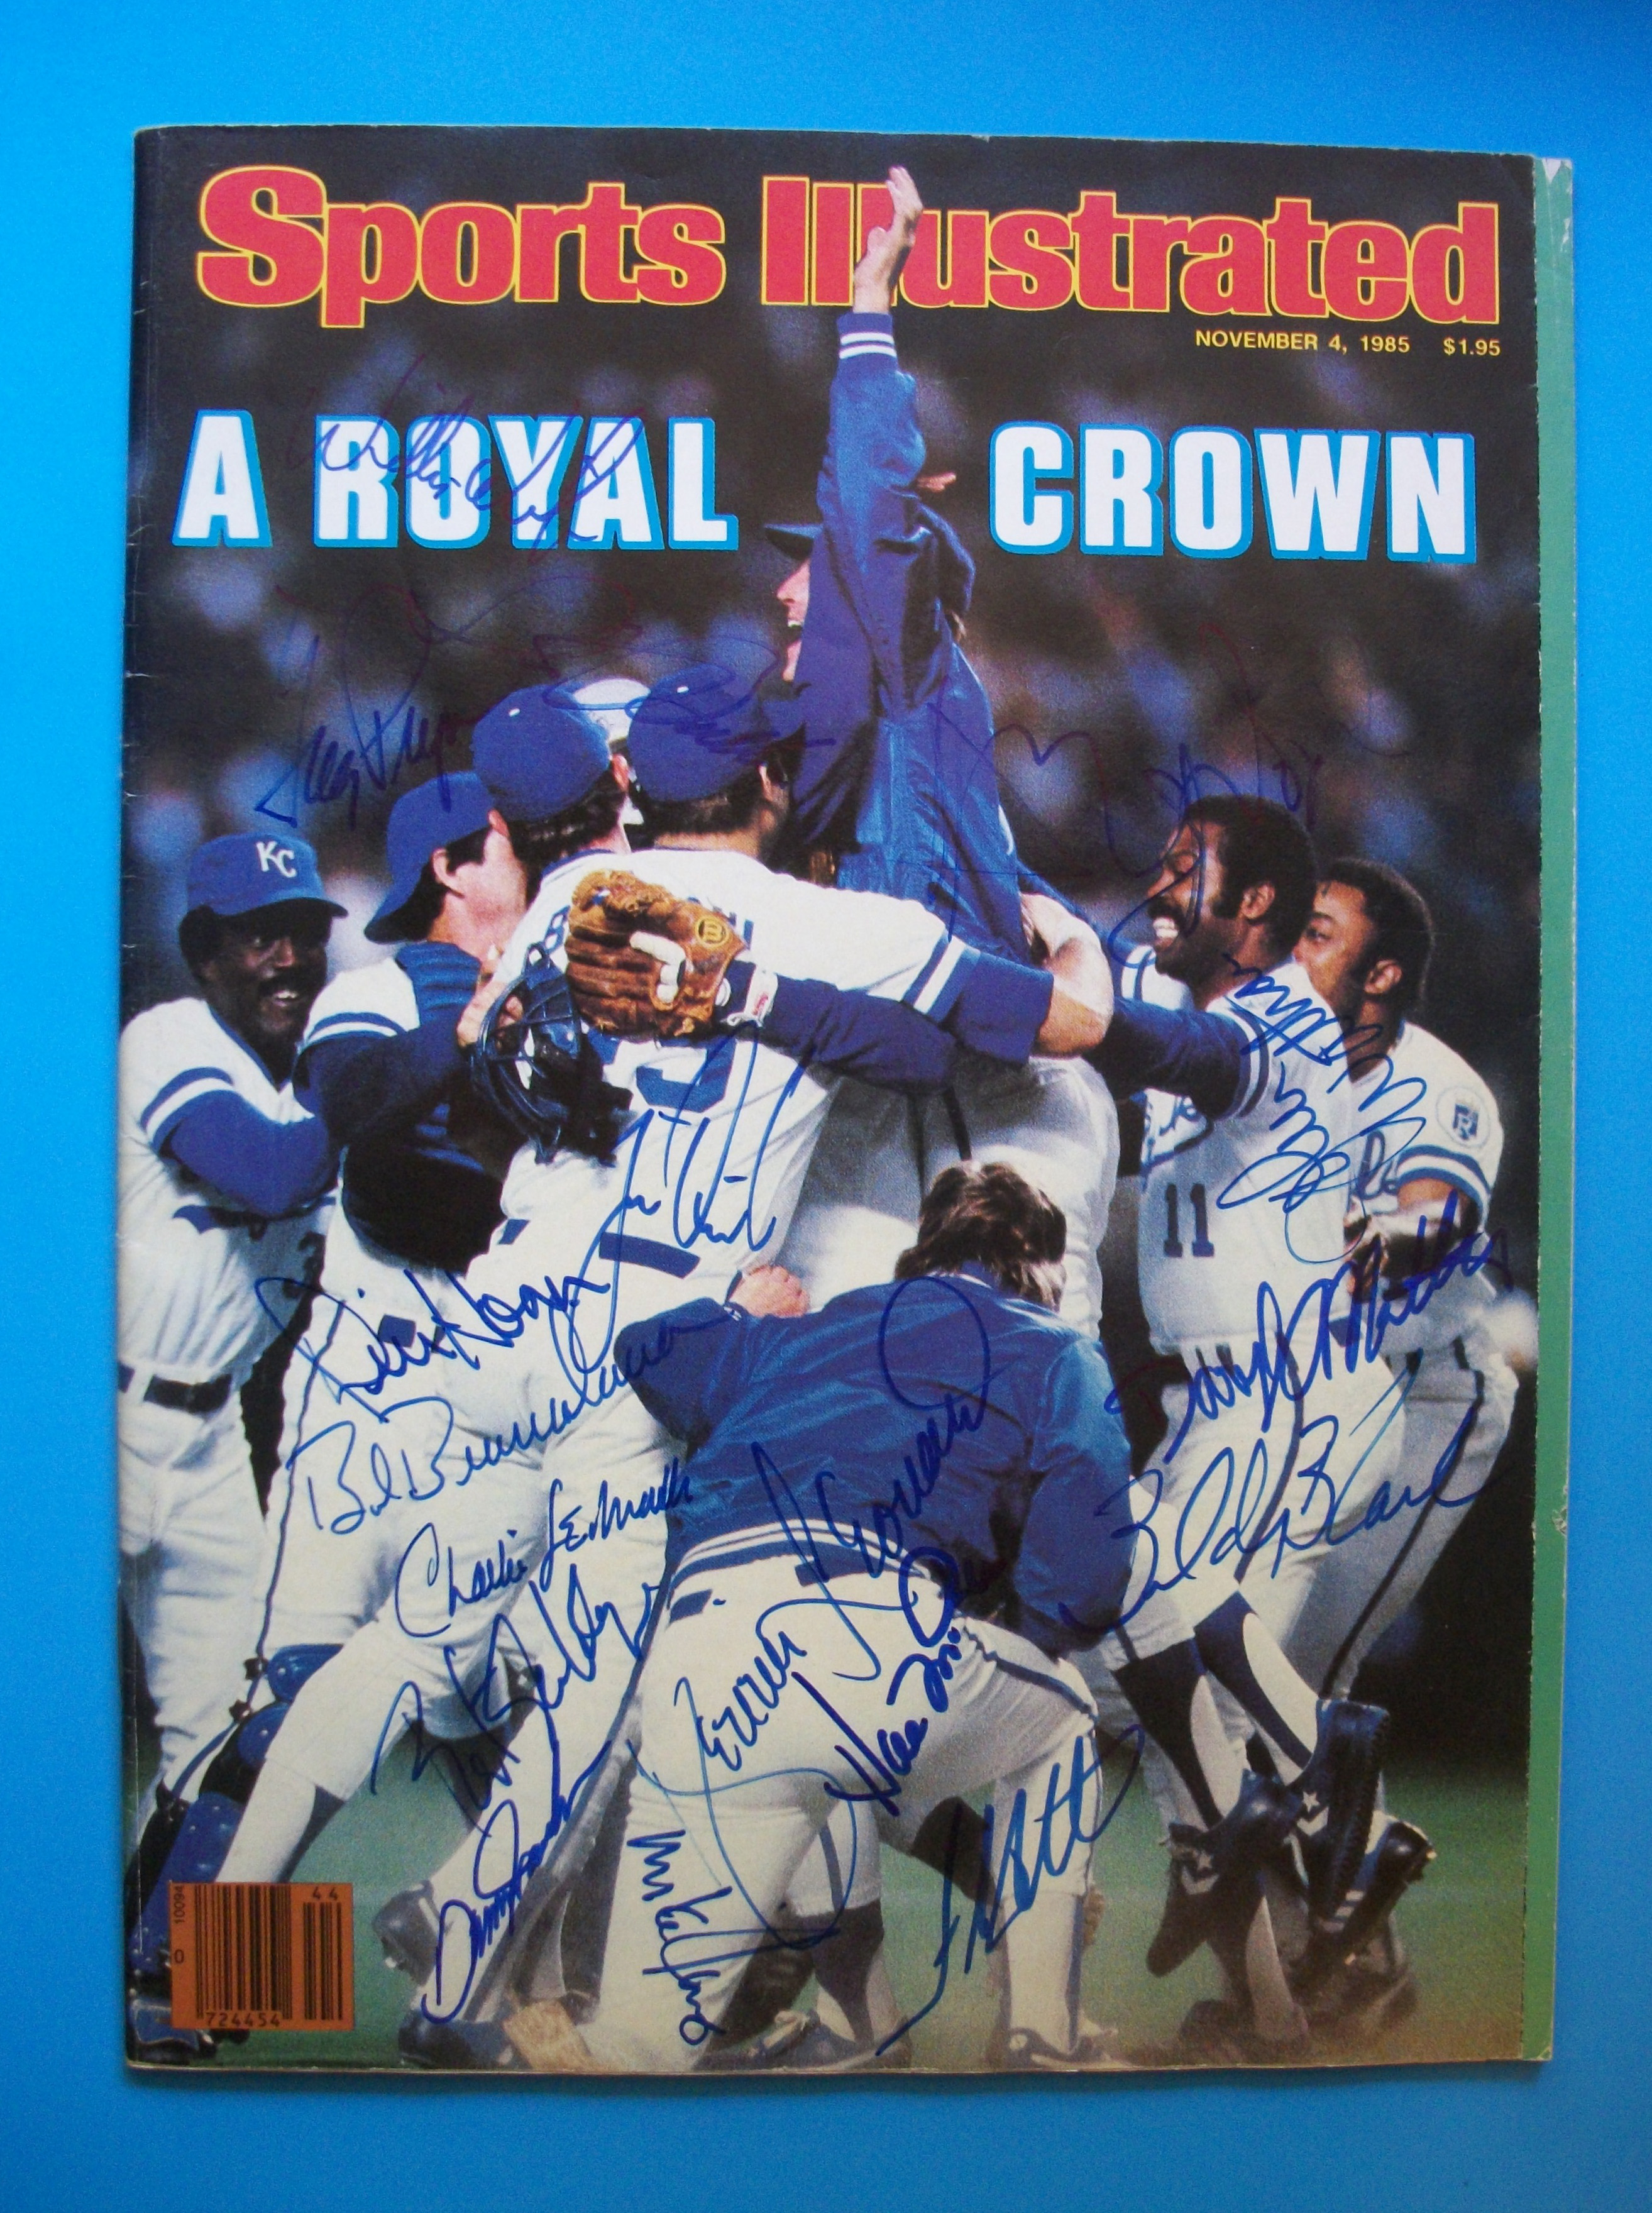 Kansas City Royals on X: Sneak peek of the 1985 throwback power